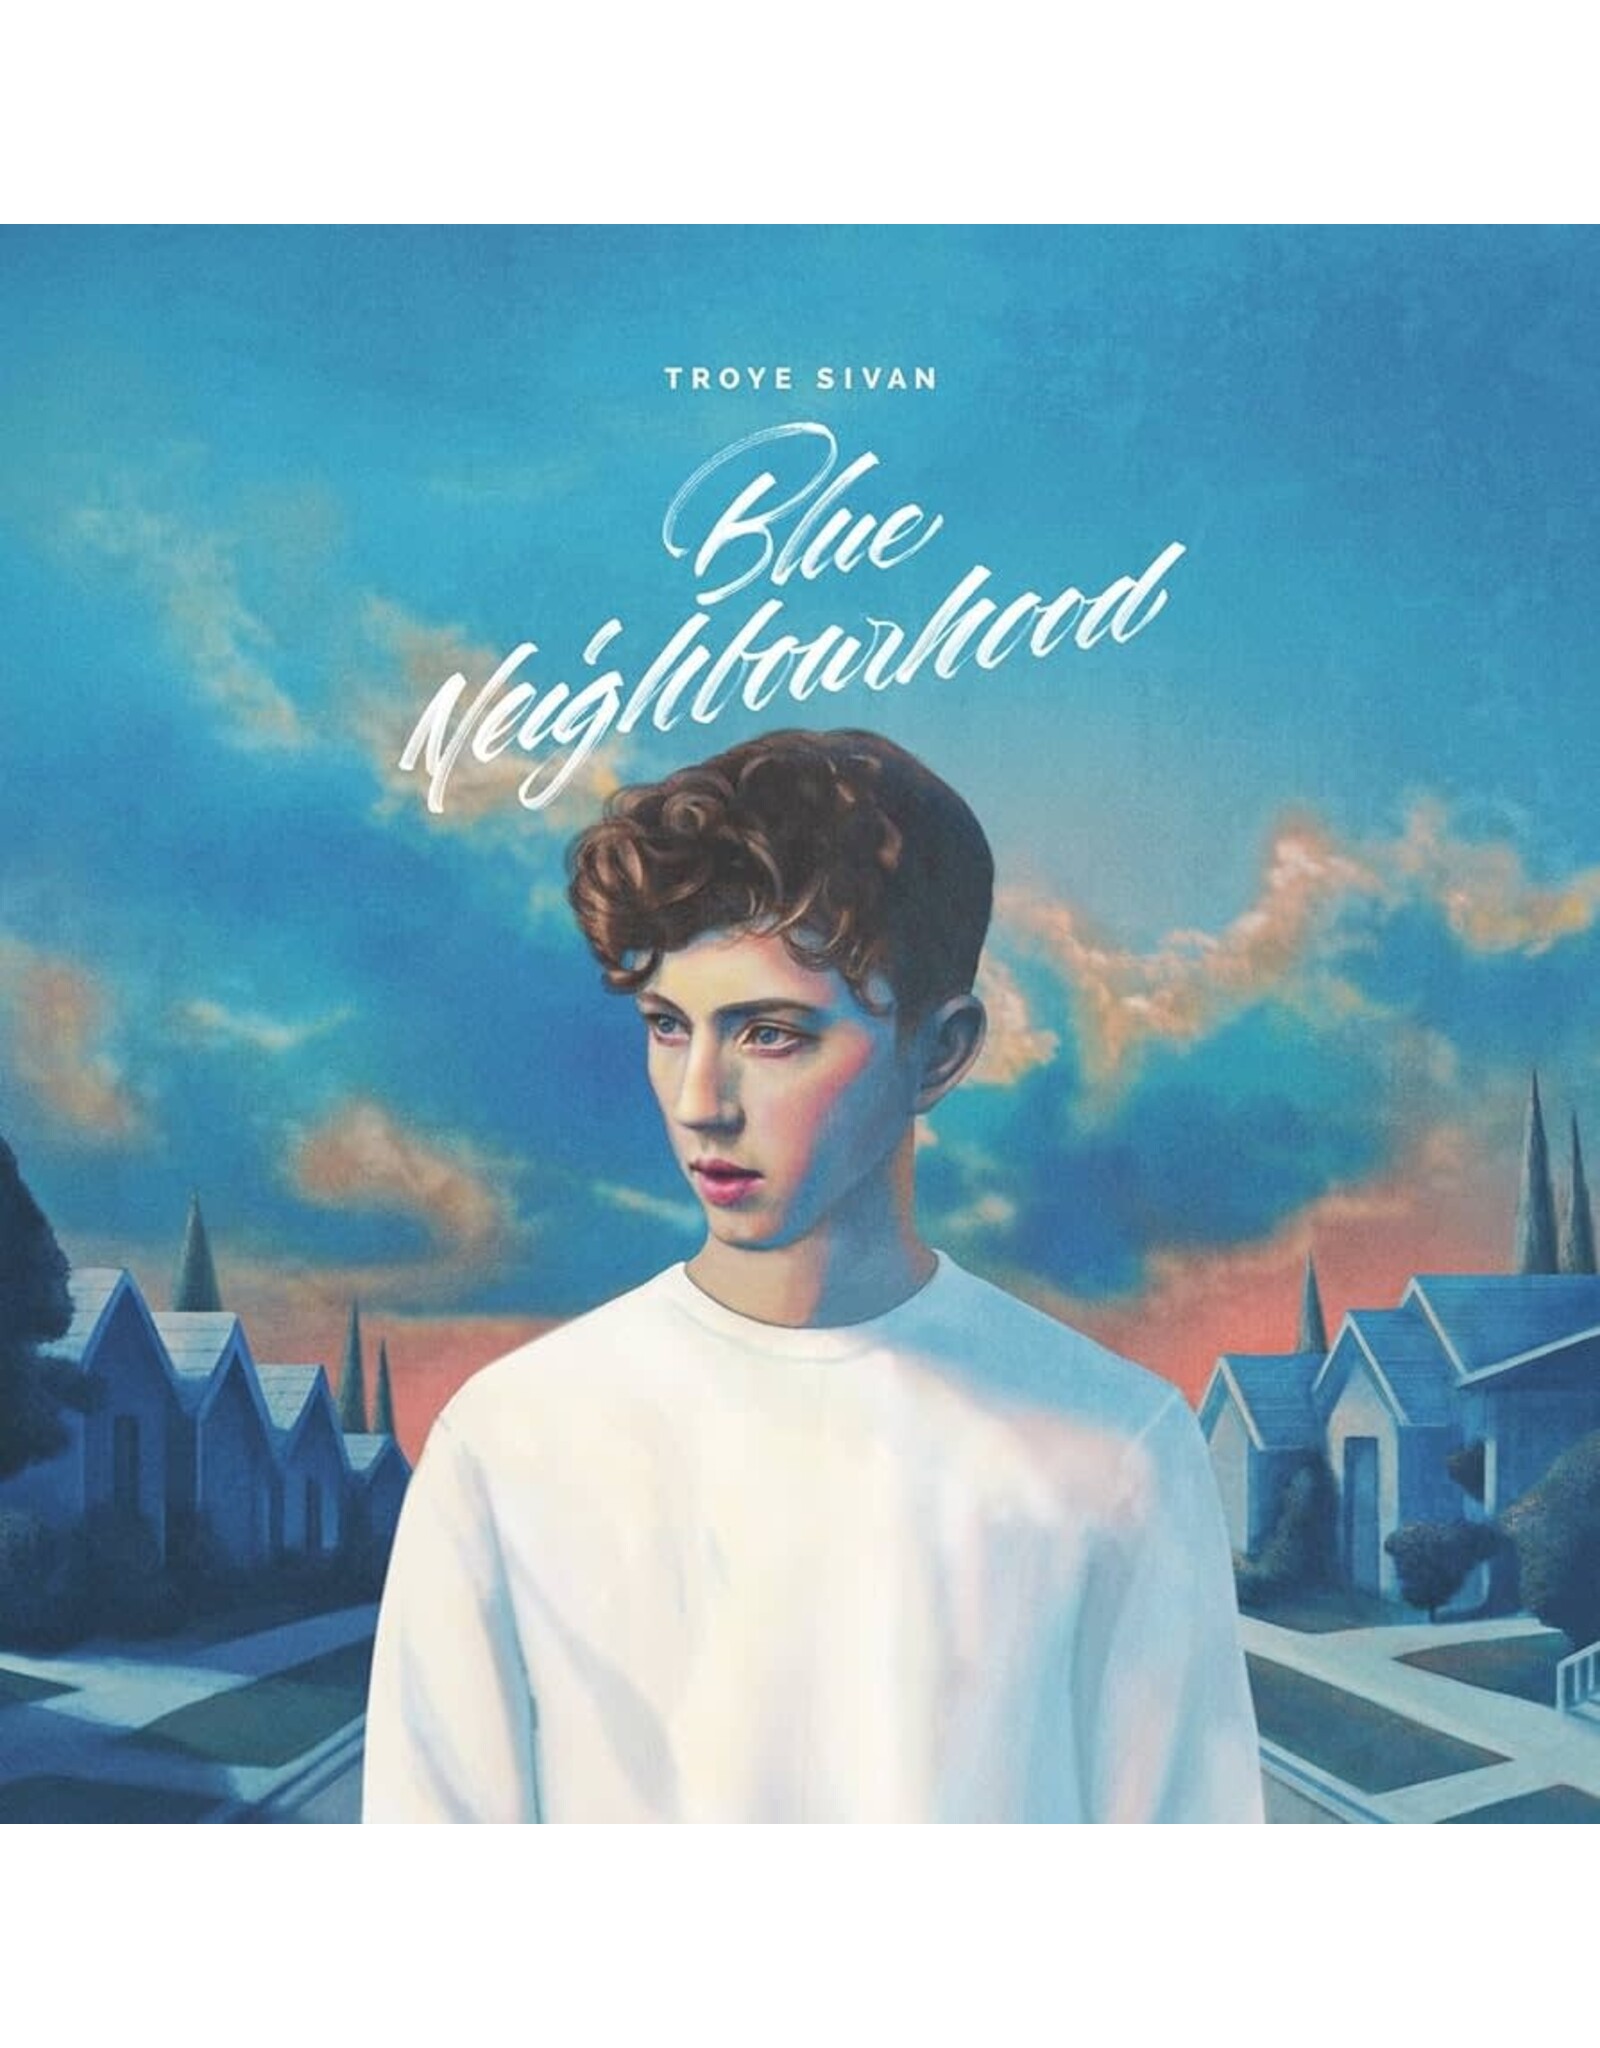 Troye Sivan - Blue Neighbourhood (Deluxe Edition)